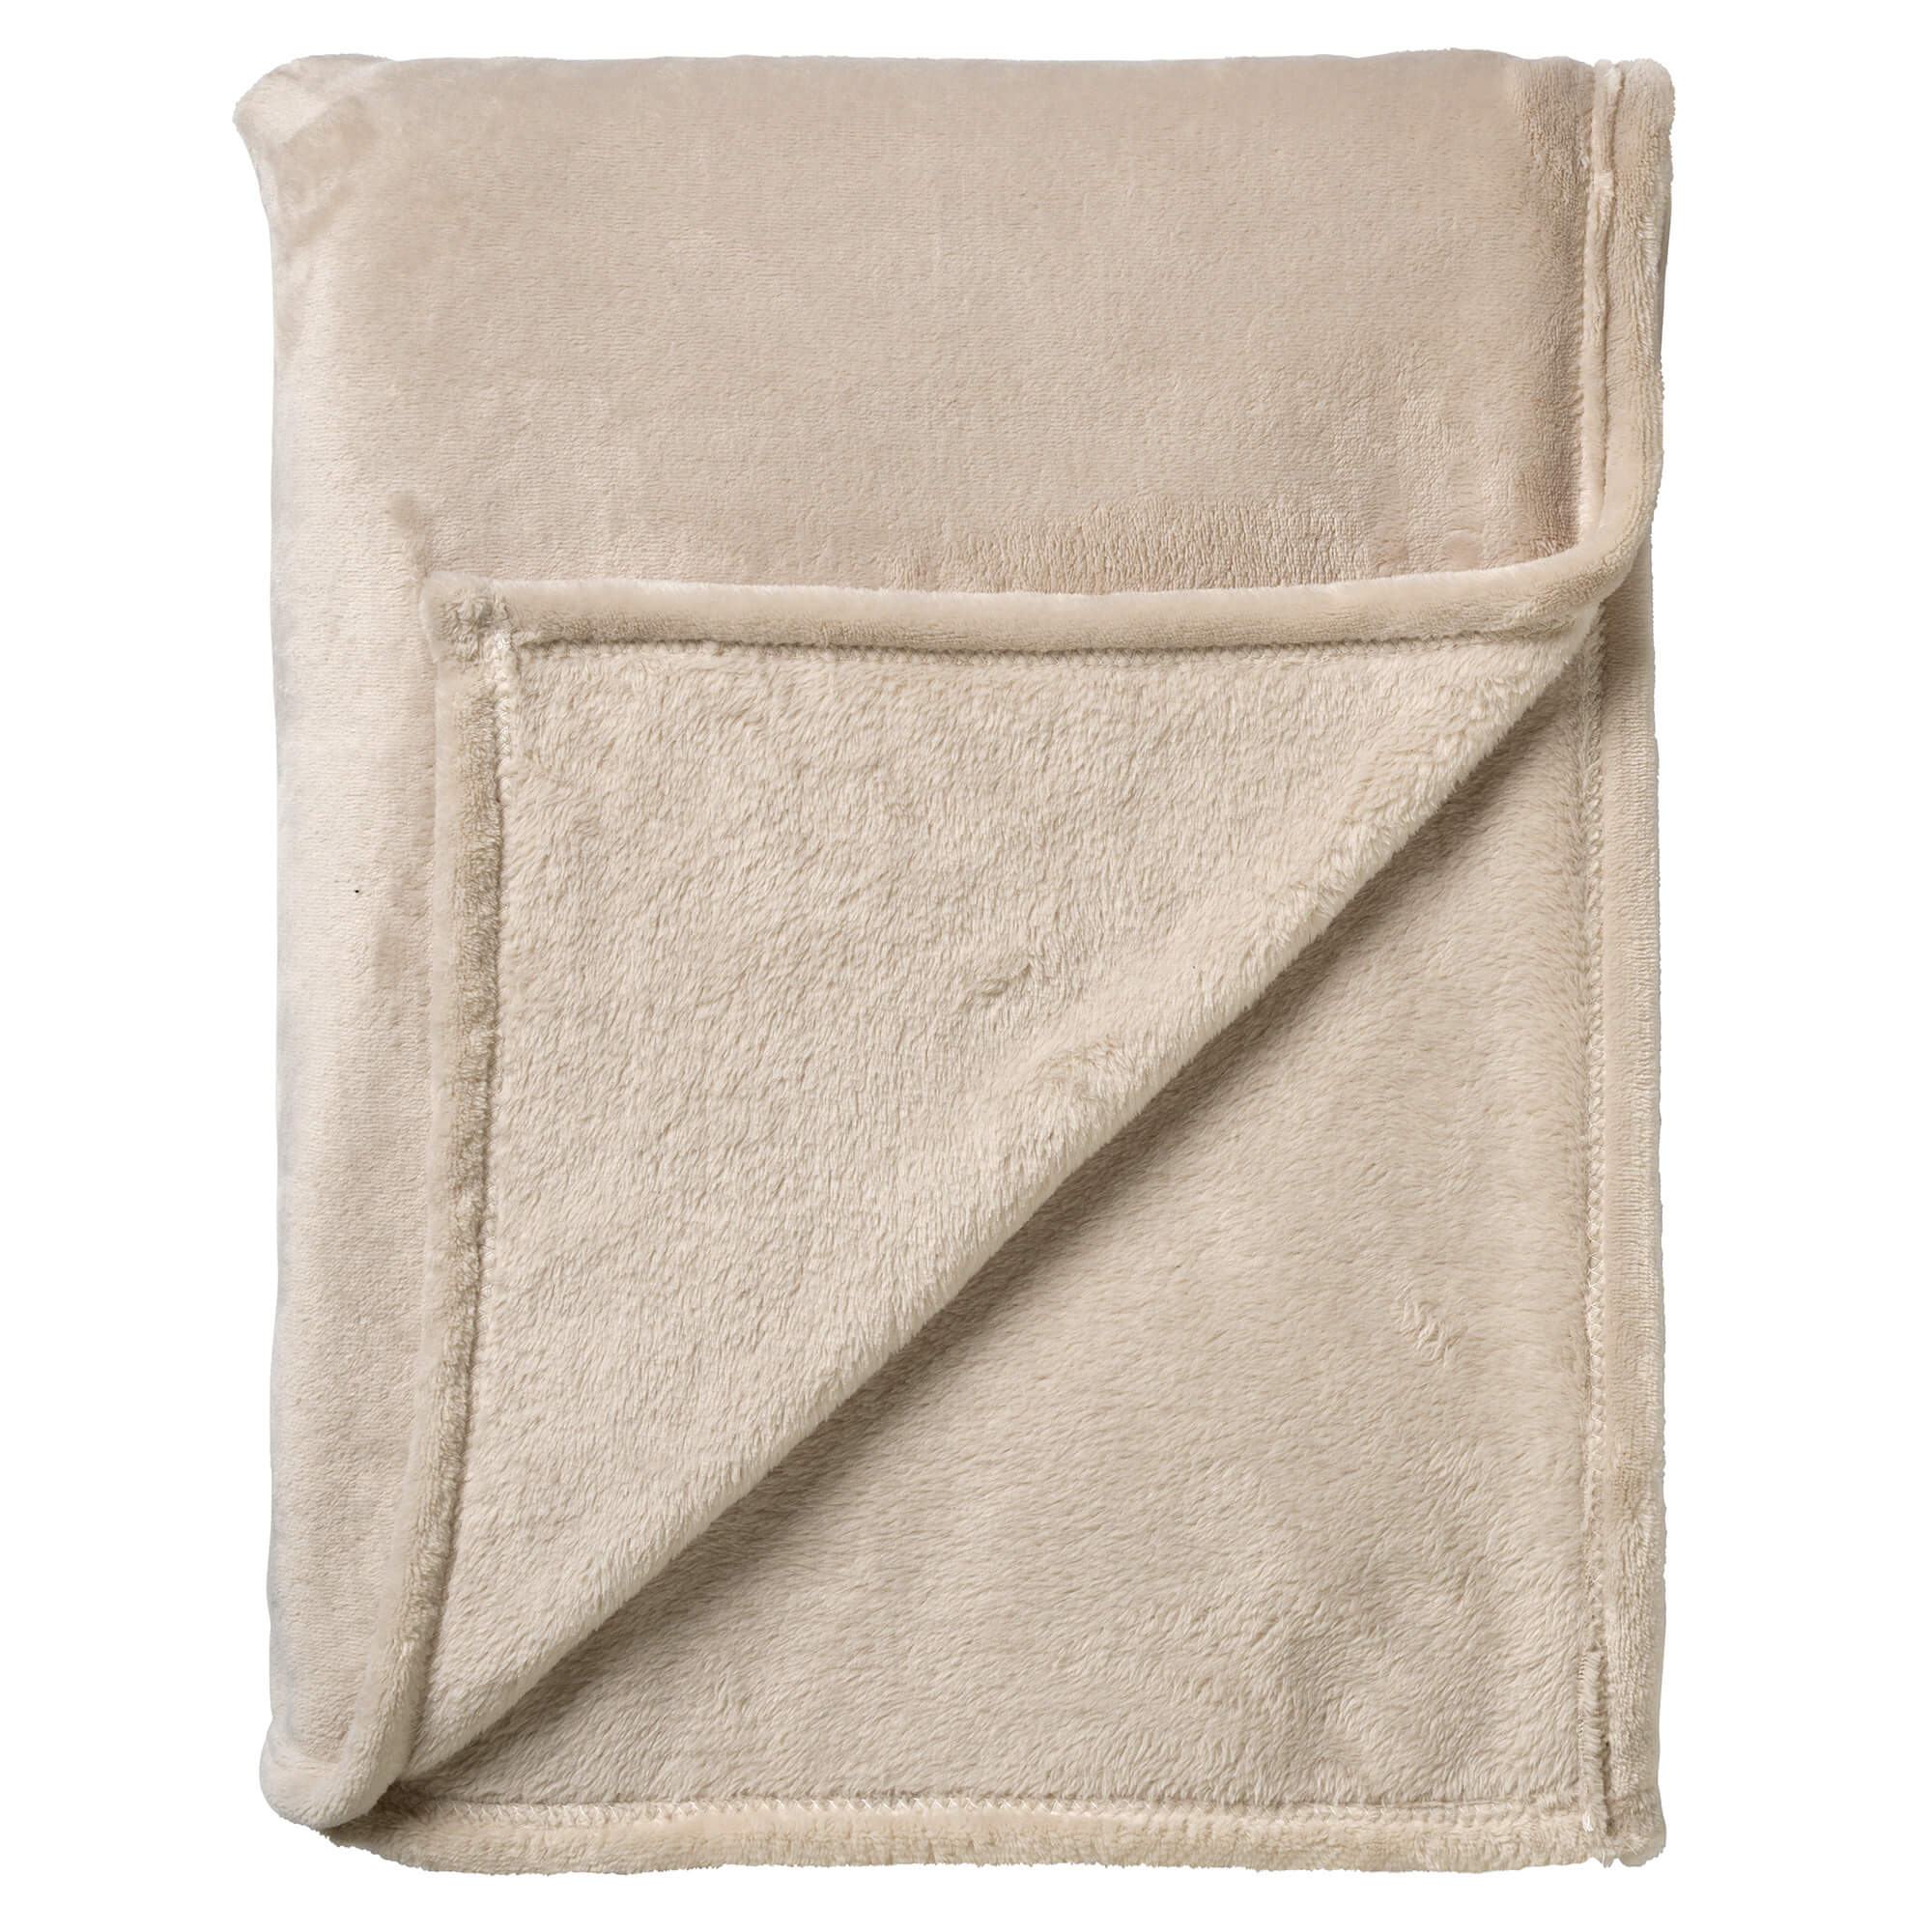 BILLY - Plaid 150x200 cm - flannel fleece - superzacht - Pumice Stone - beige